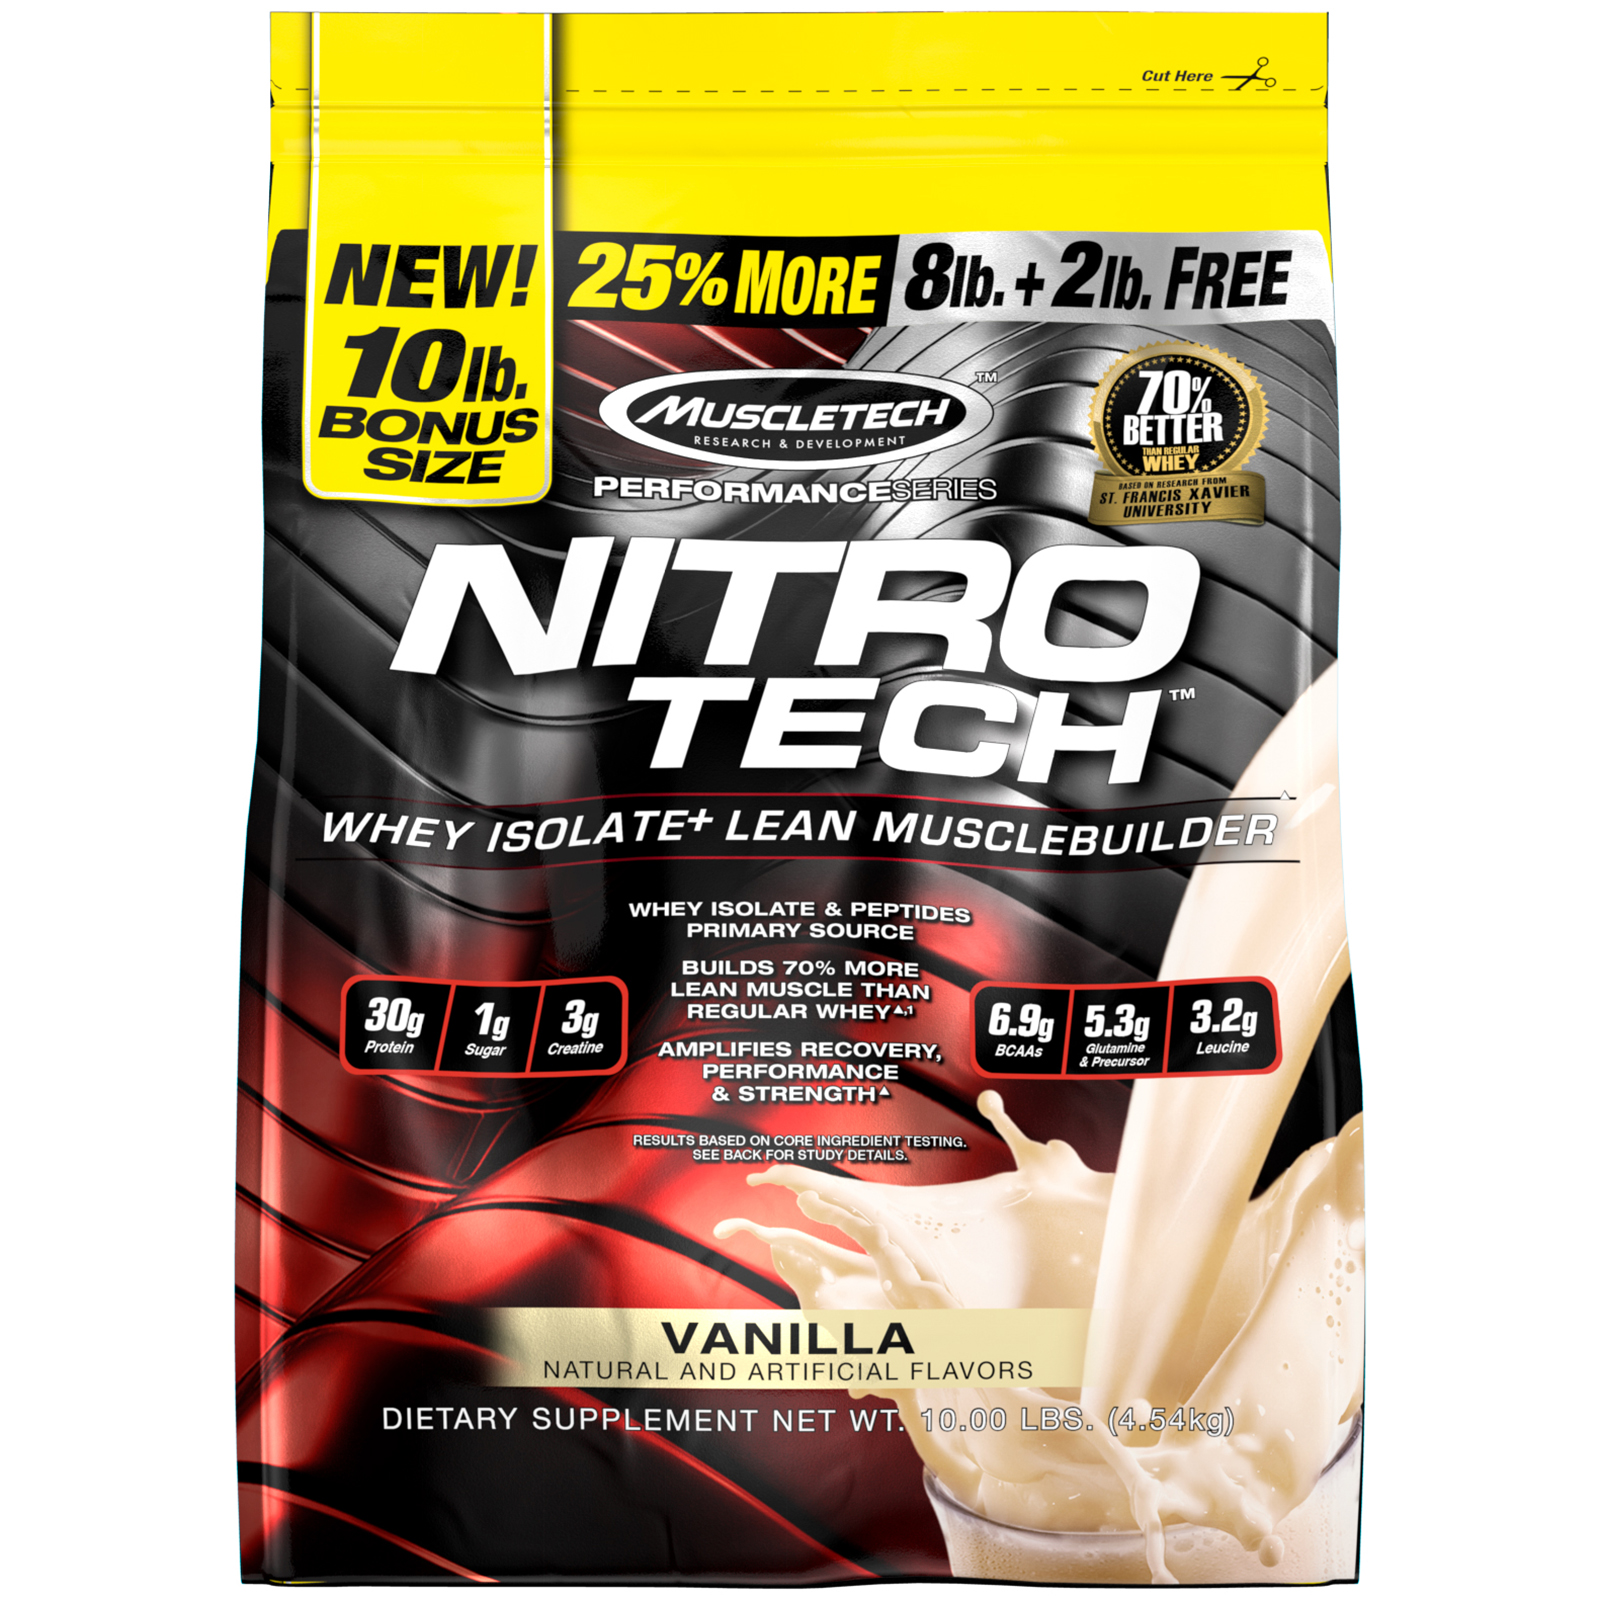 Muscletech Nitro Tech Whey Isolate Lean Musclebuilder Vanilla 10 Lbs 4 54 Kg Iherb